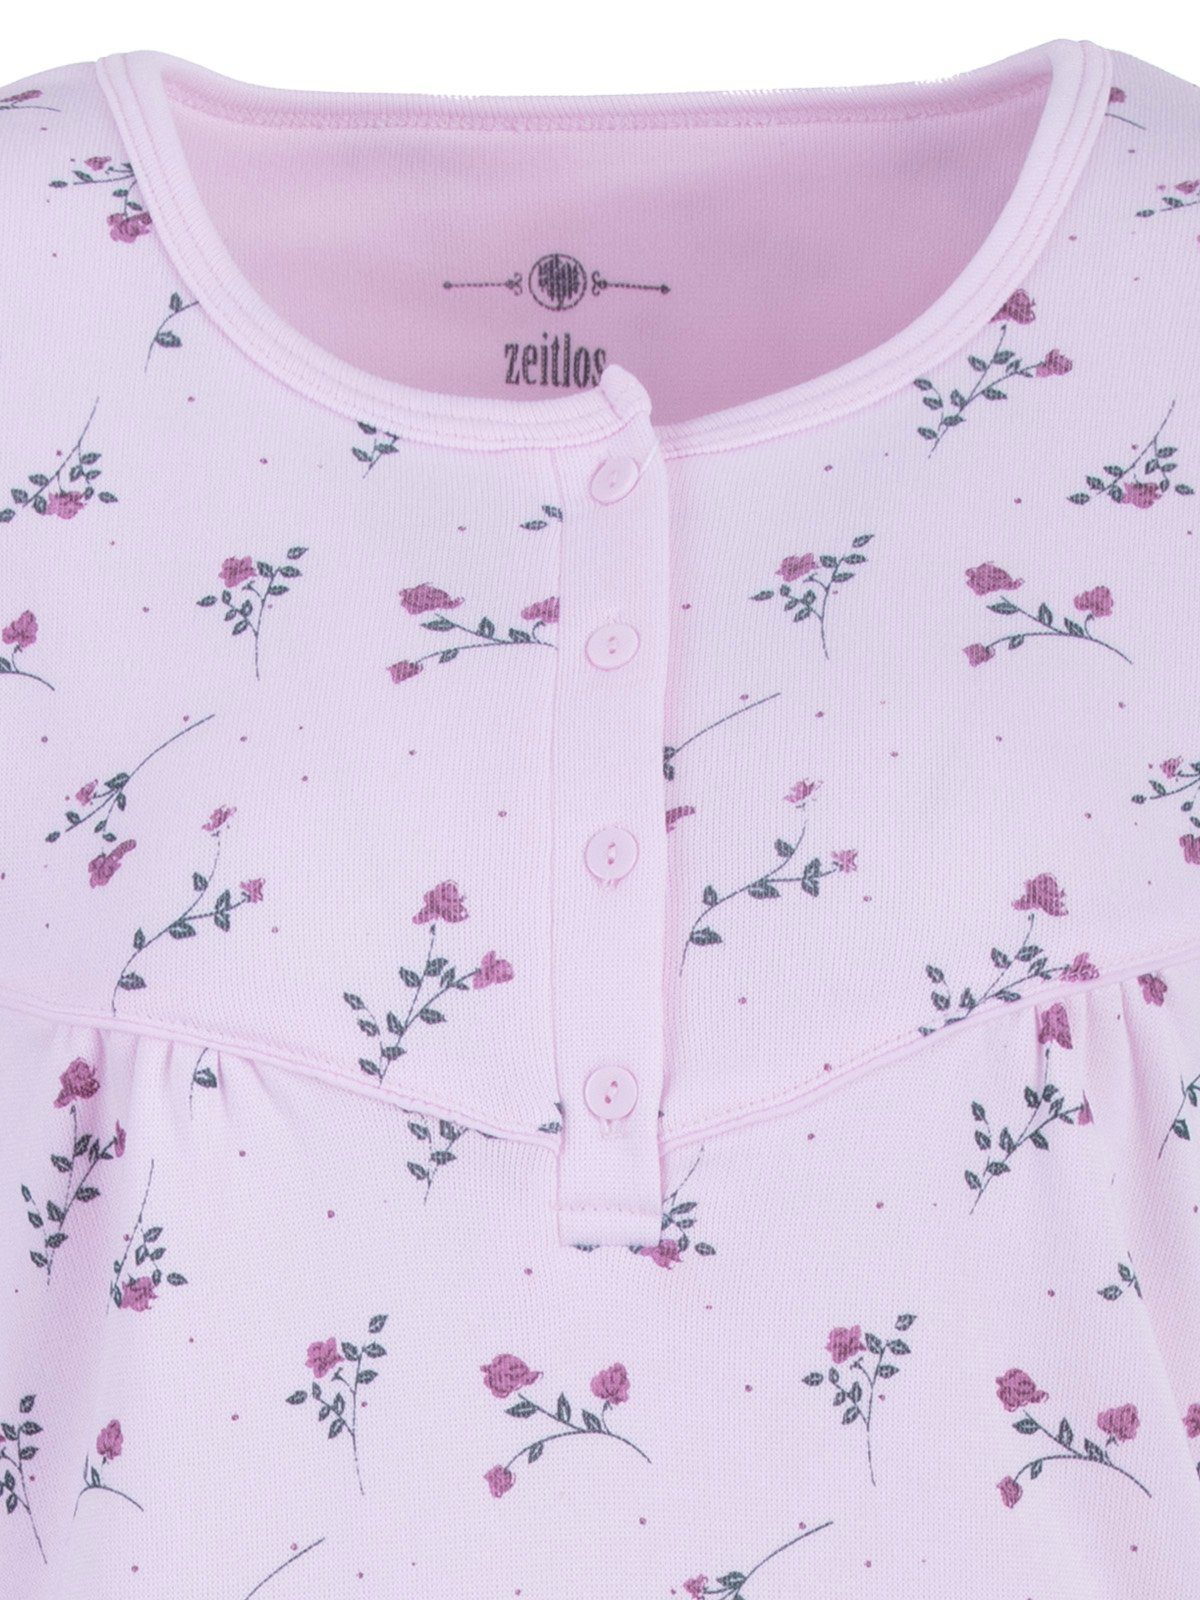 zeitlos Nachthemd - Thermo Blumen Nachthemd Paspel rosa